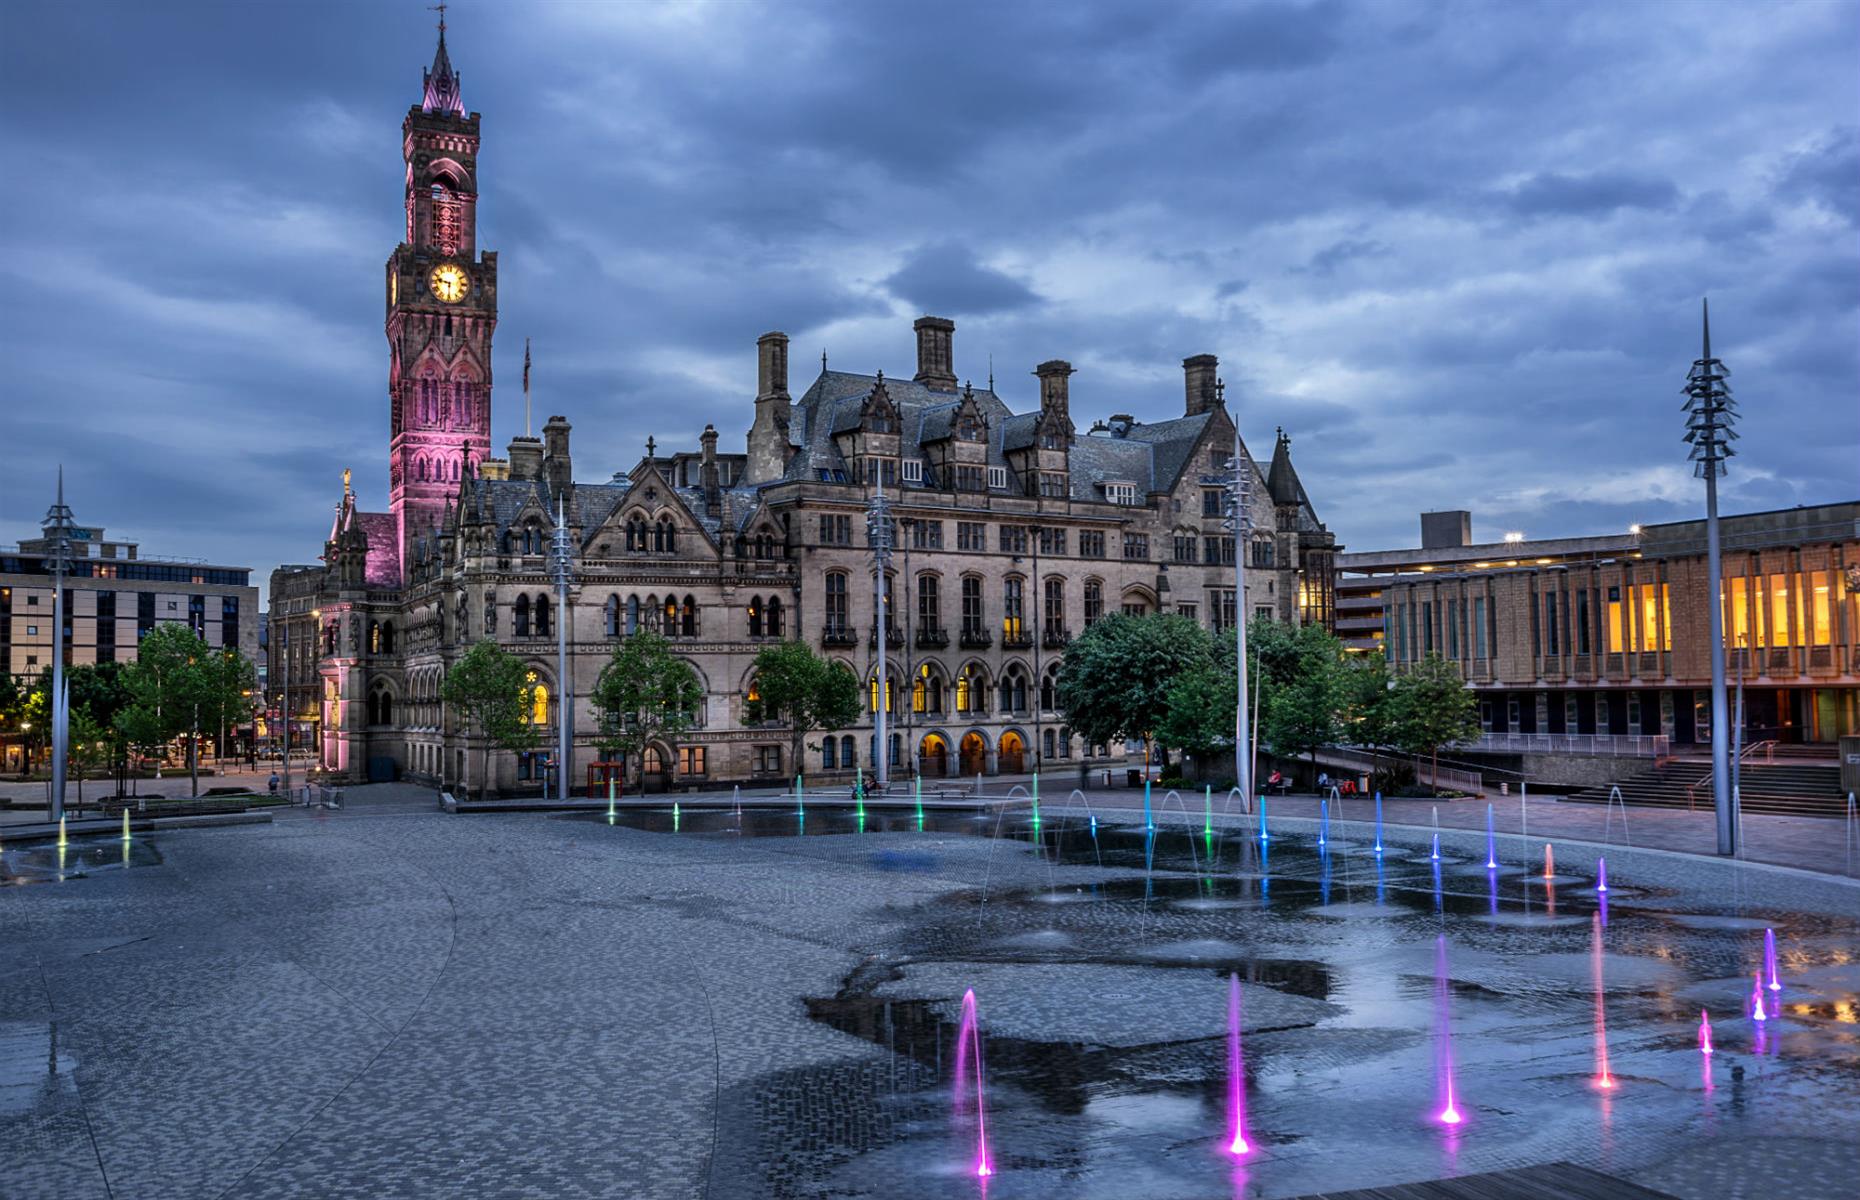 Bradford's historic city square